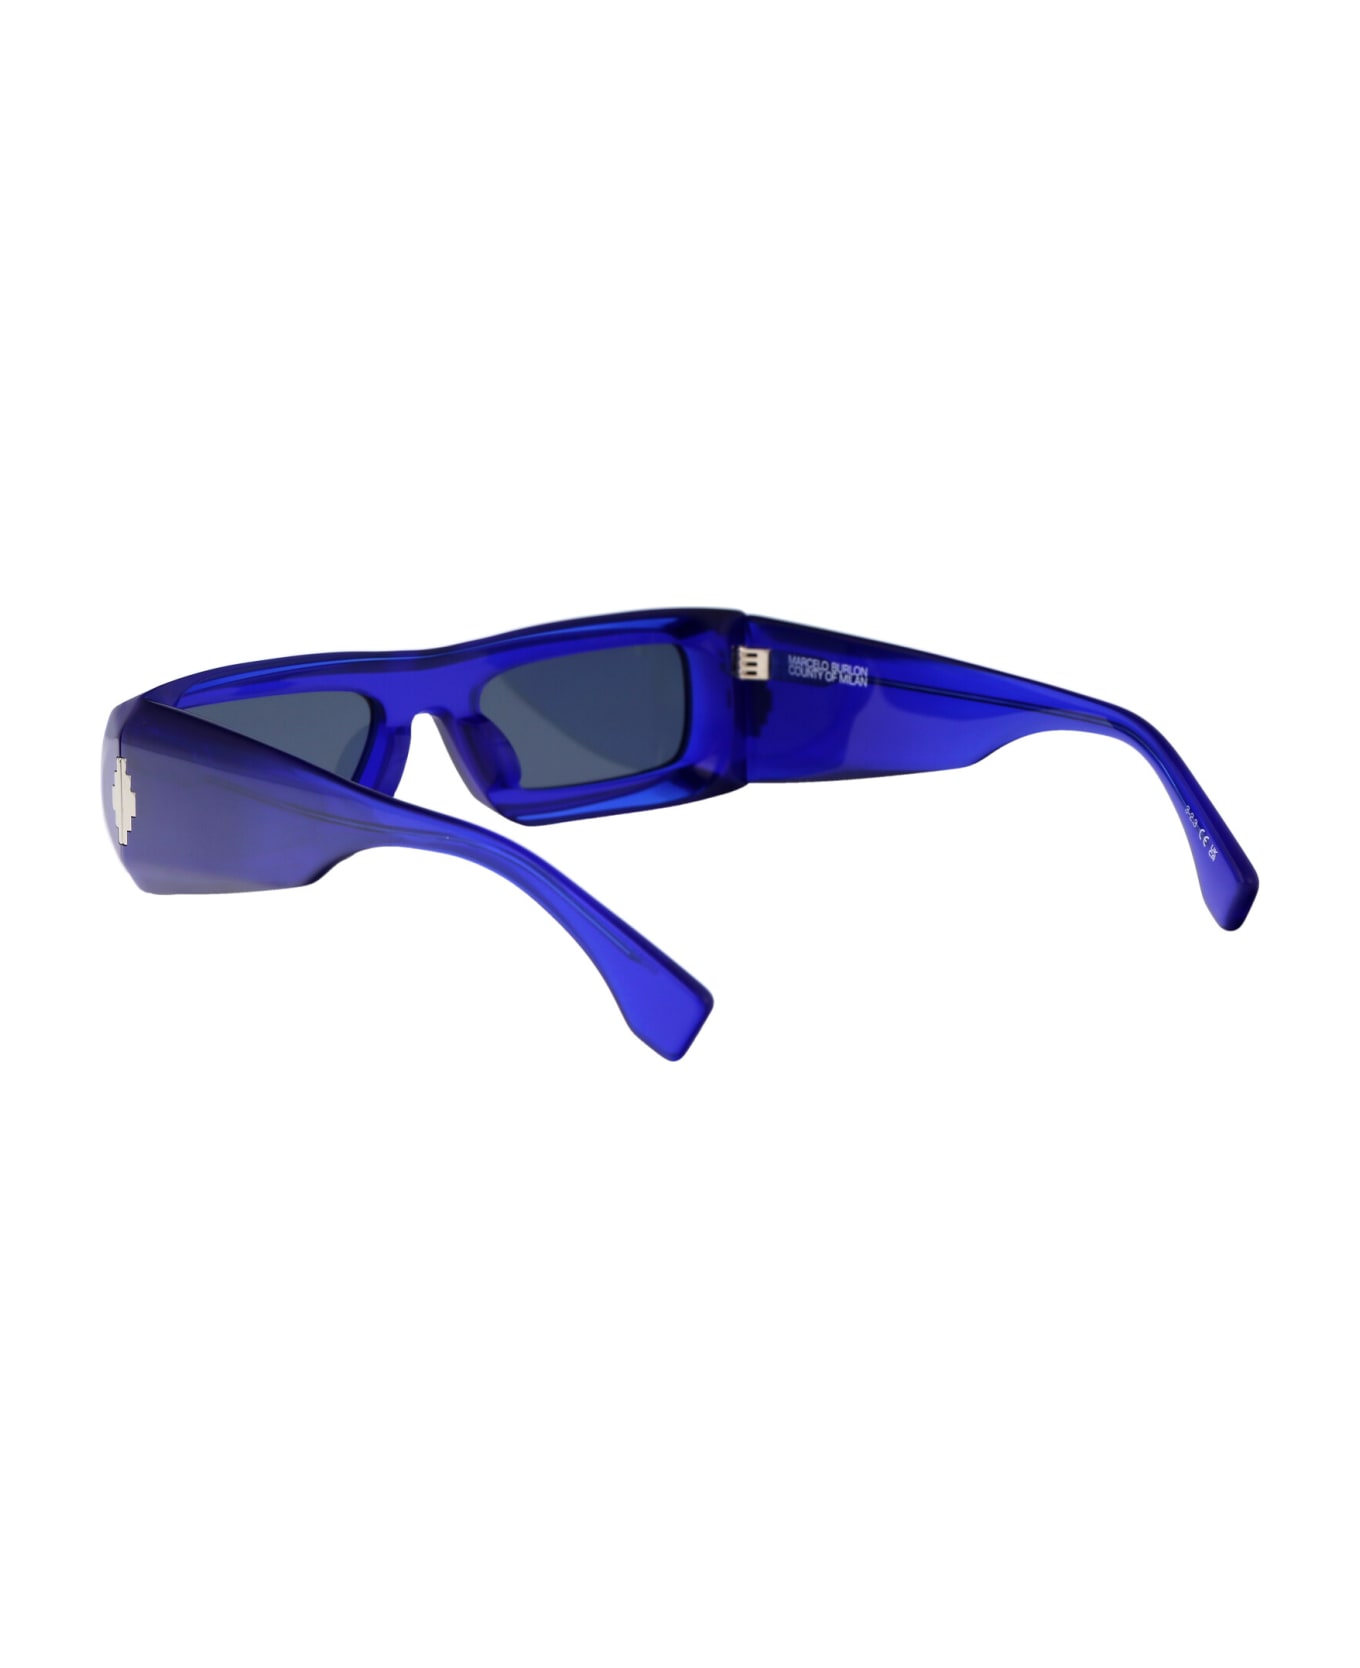 Marcelo Burlon Maqui Sunglasses - 4545 BLUE